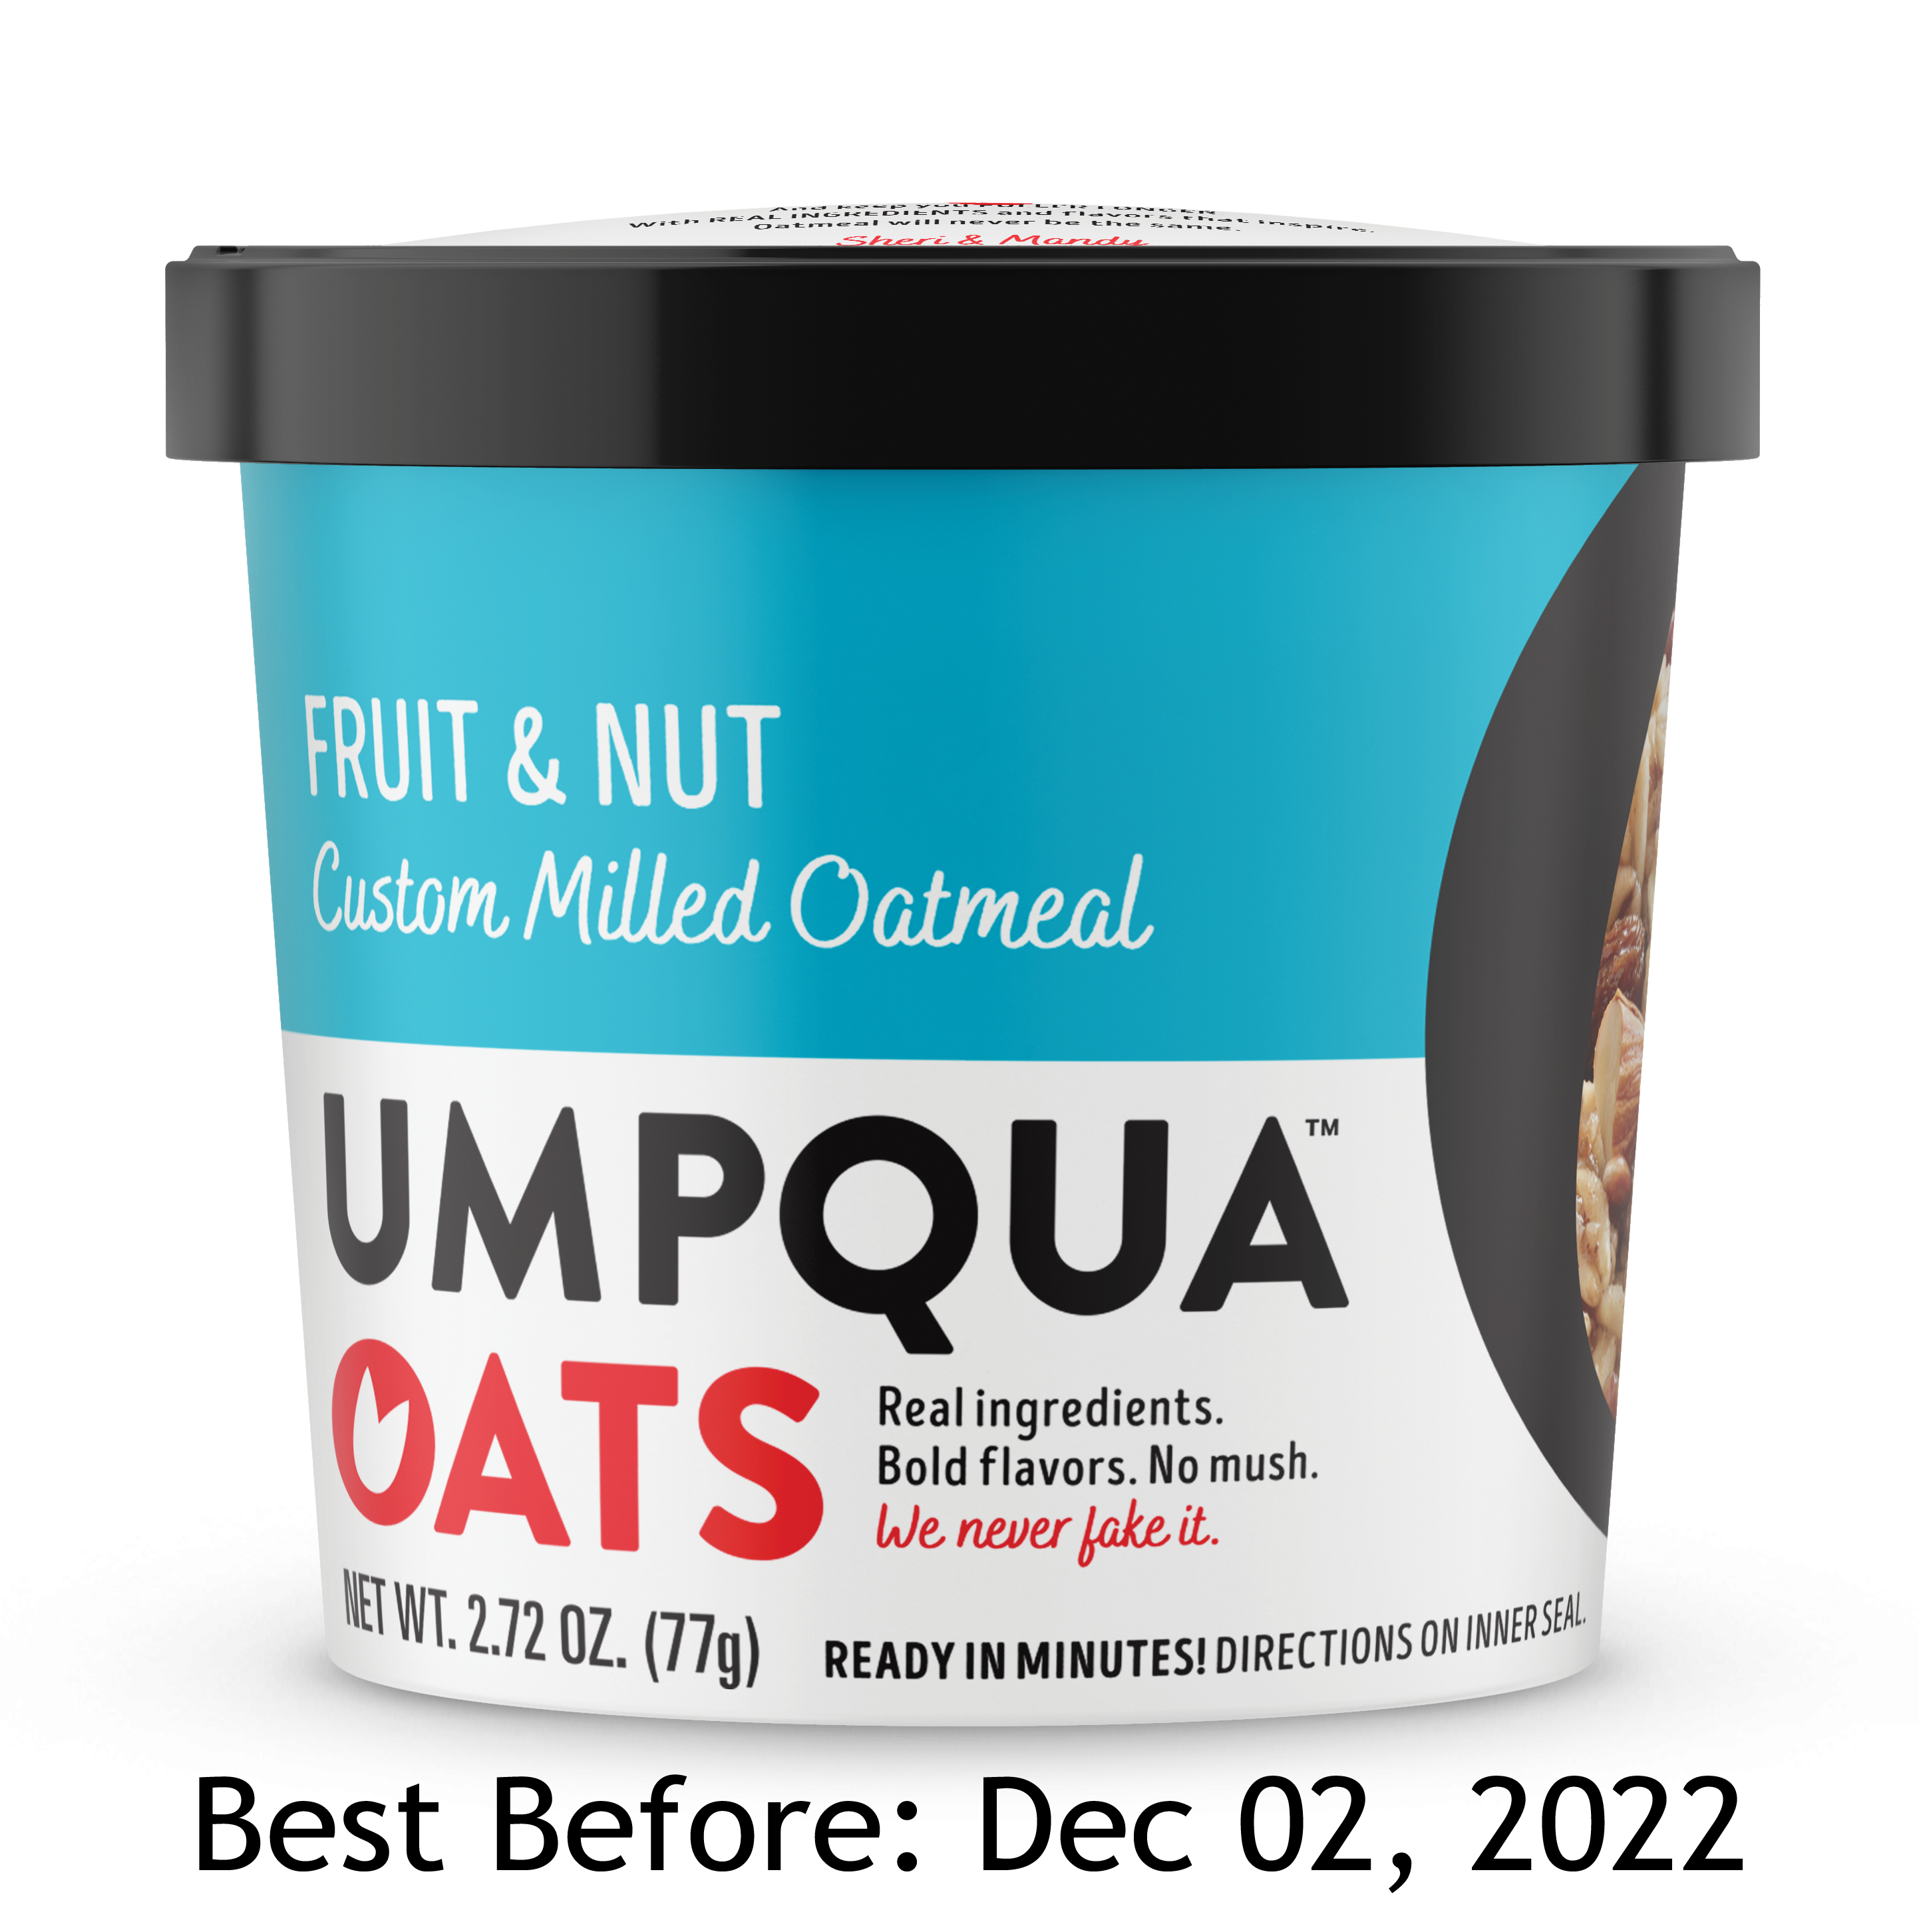 Umpqua Oats Fruit & Nut Kick Start